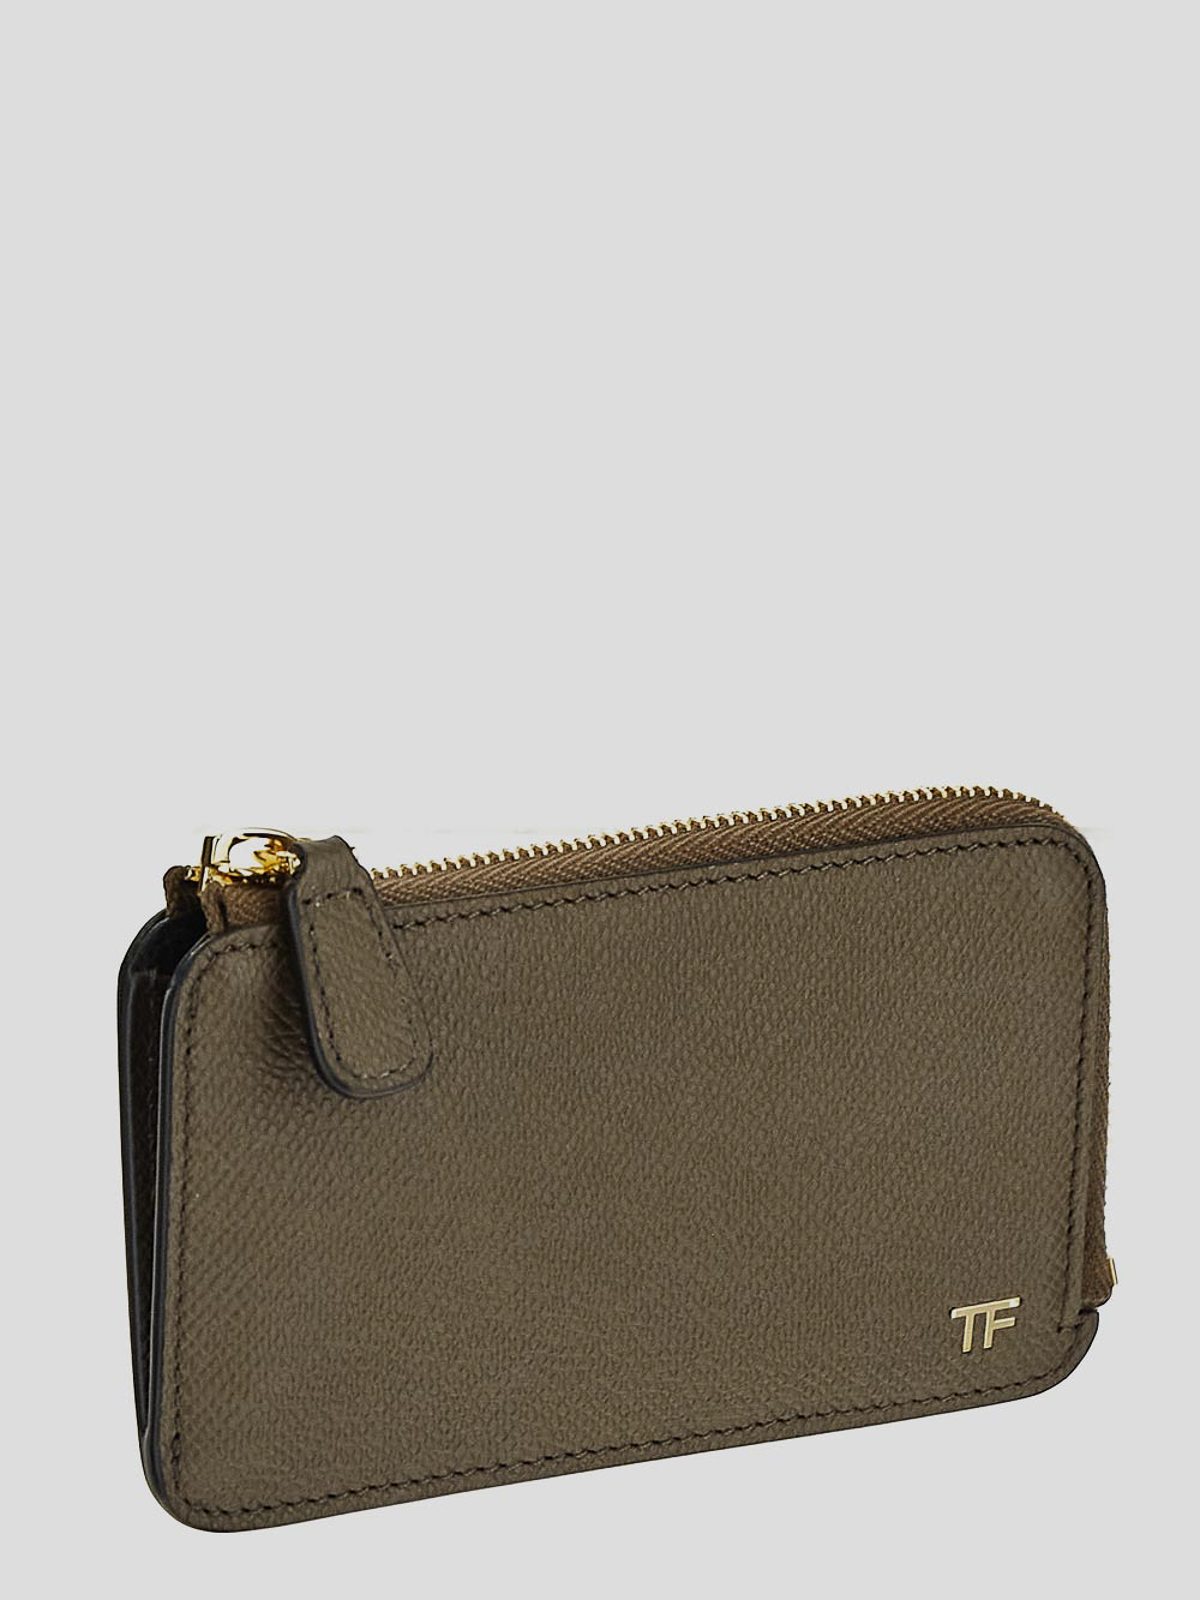 TOM FORD Handbags, Purses & Wallets for Women